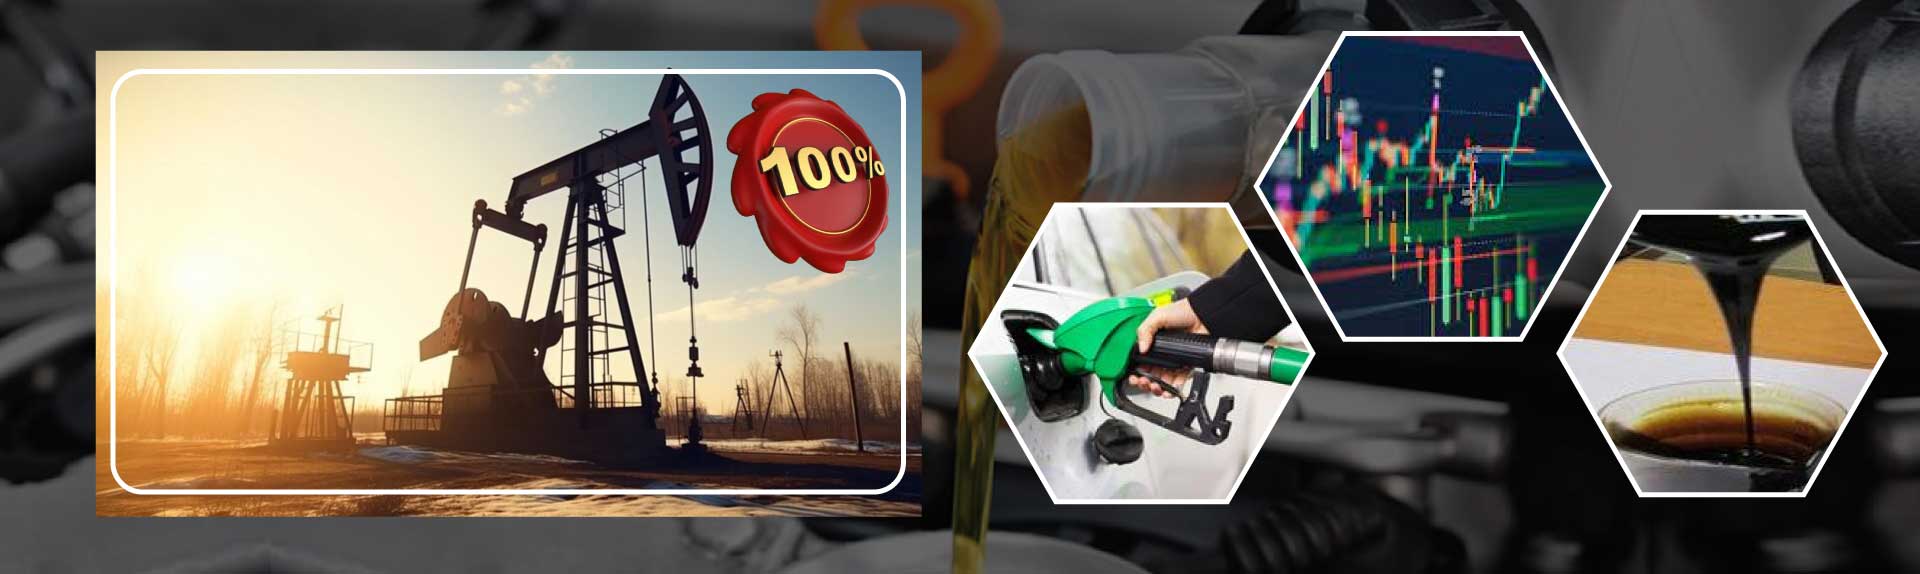 Fuel Oil Supplier in UAE